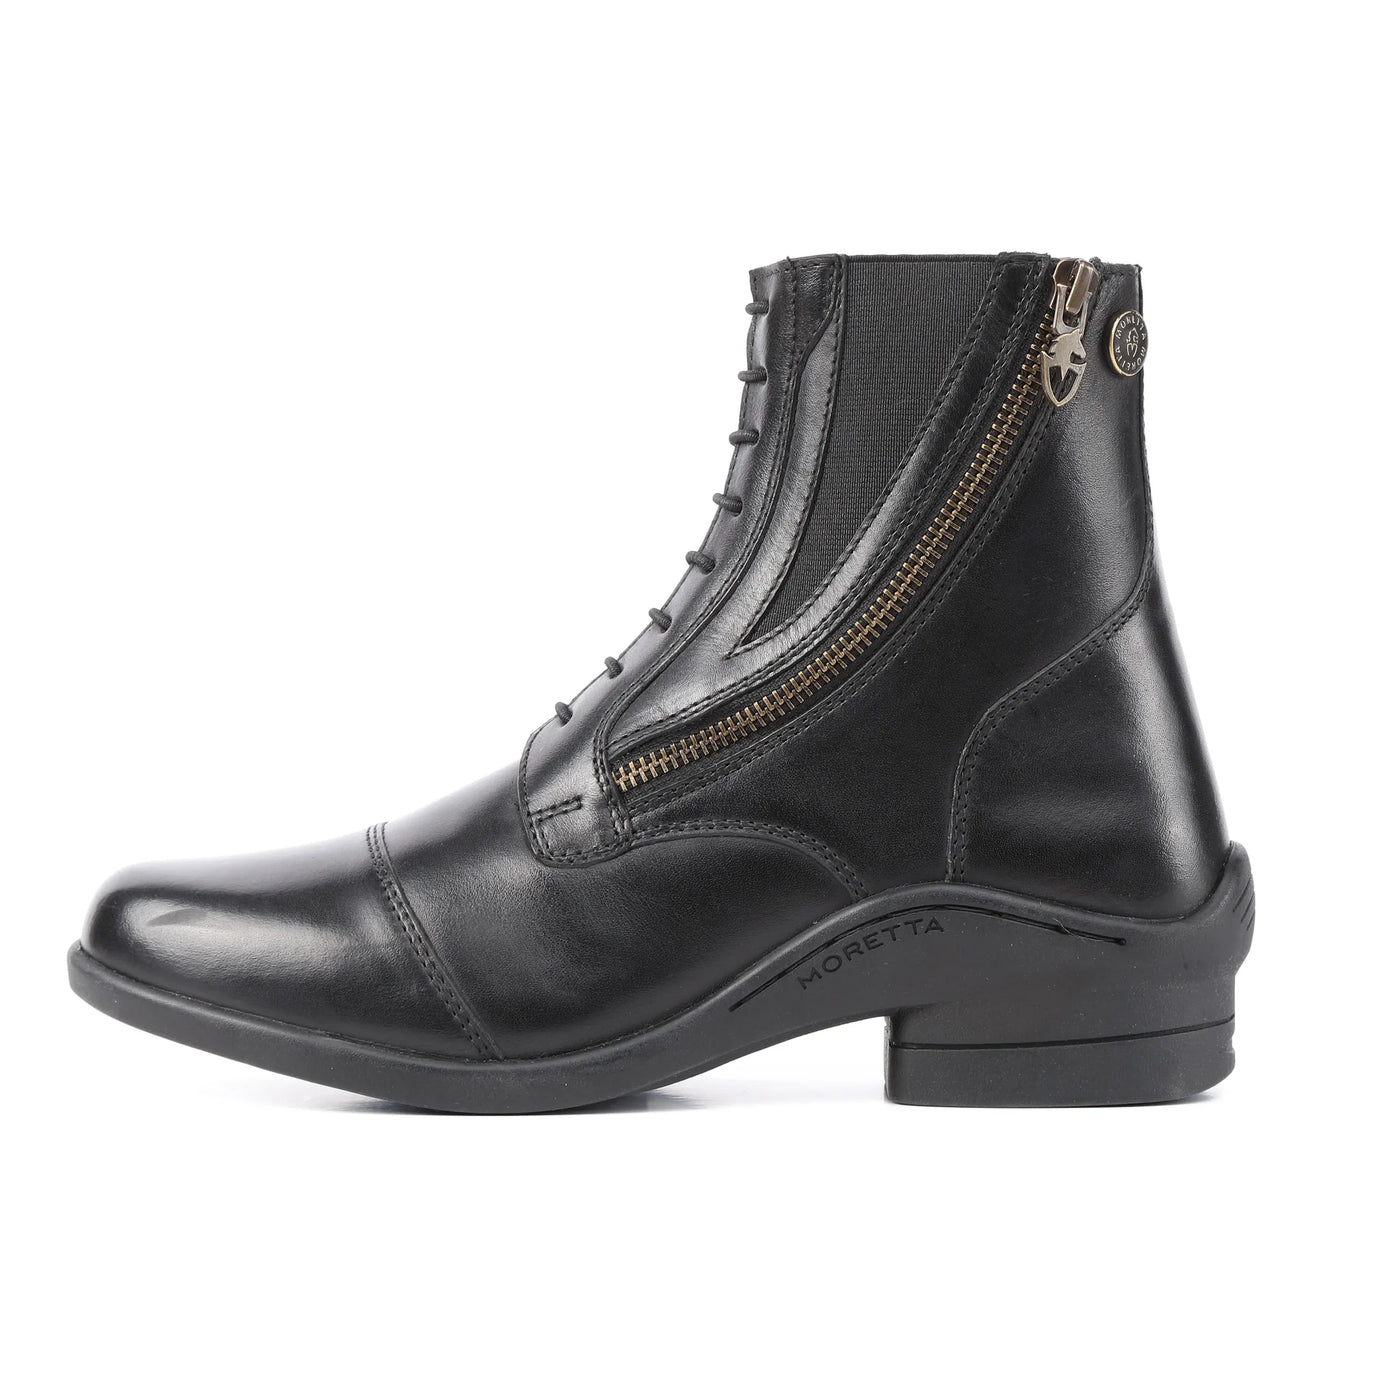 Shires Moretta Alessia Leather Paddock Boot - Black